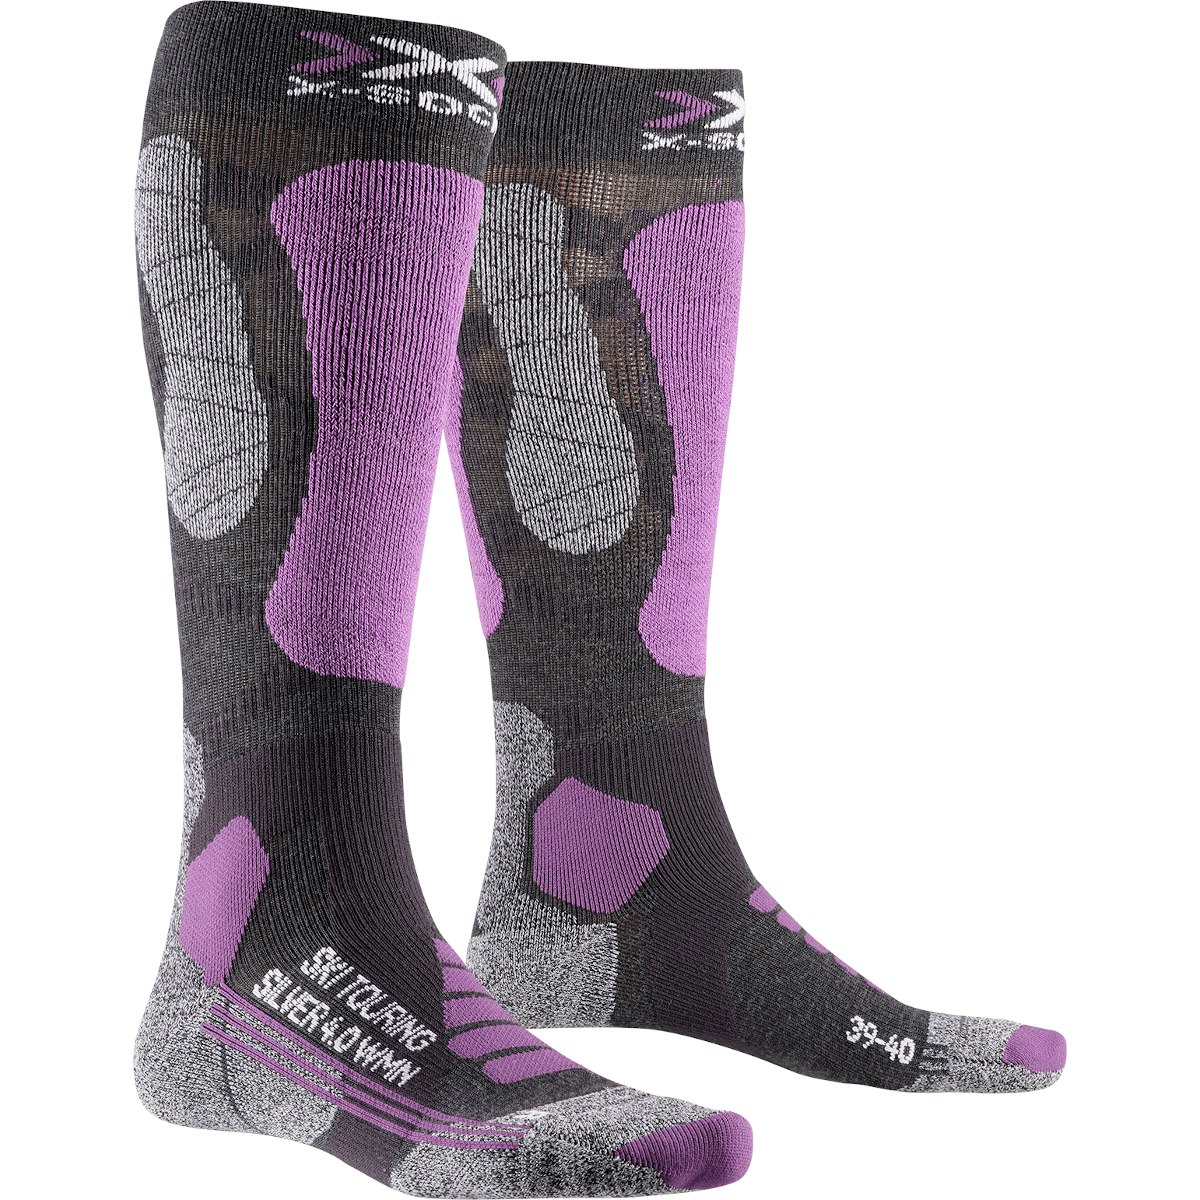 Picture of X-Socks Ski Touring Silver 4.0 Socks for Women - anthracite melange/magnolia